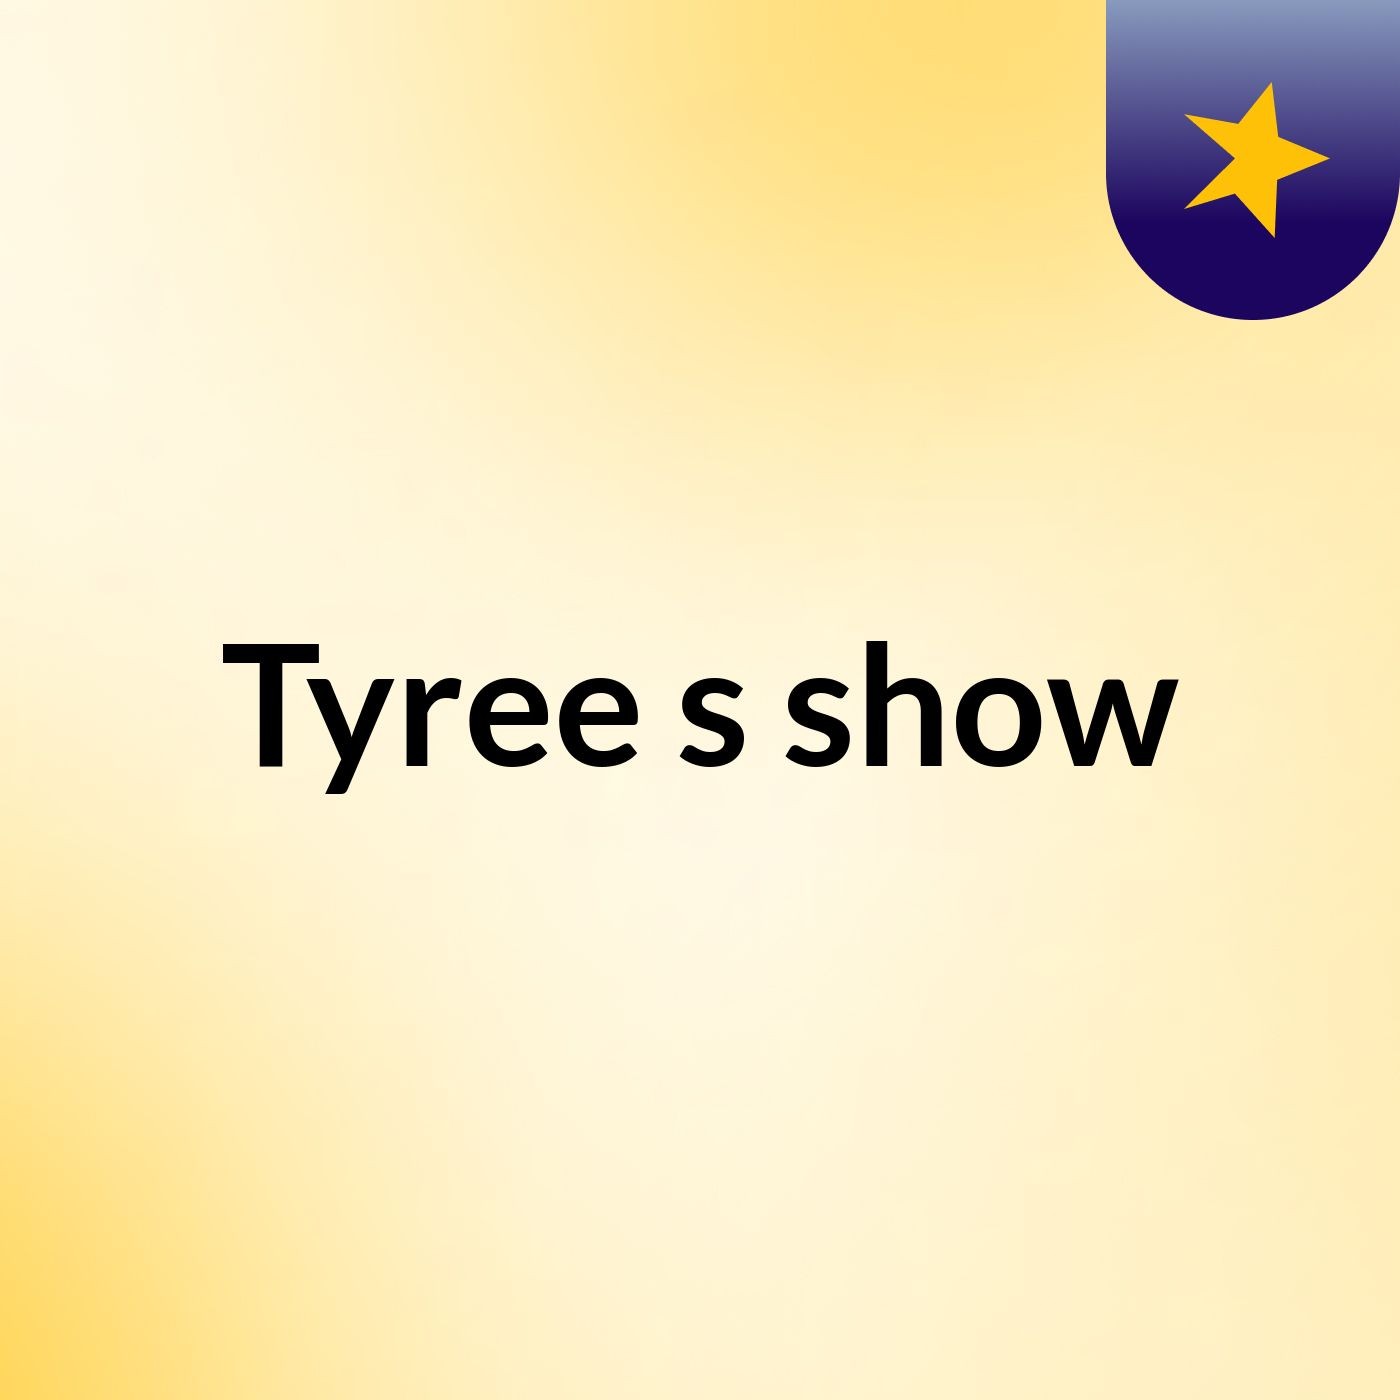 Tyree's show